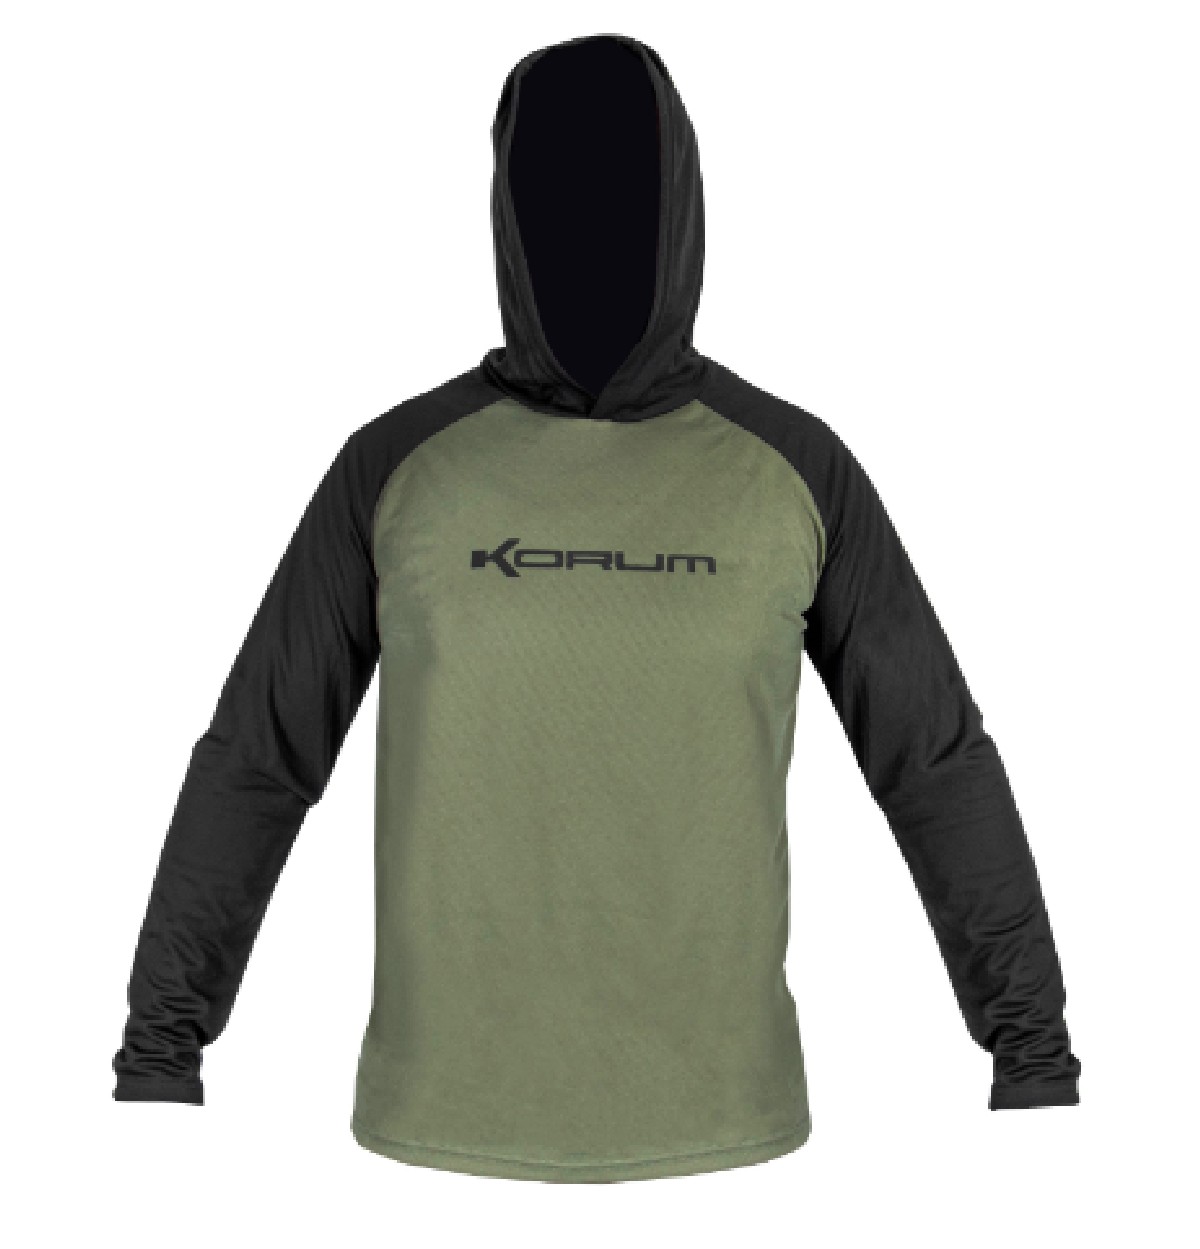 Korum dri-active hooded long sleeve t-shirt